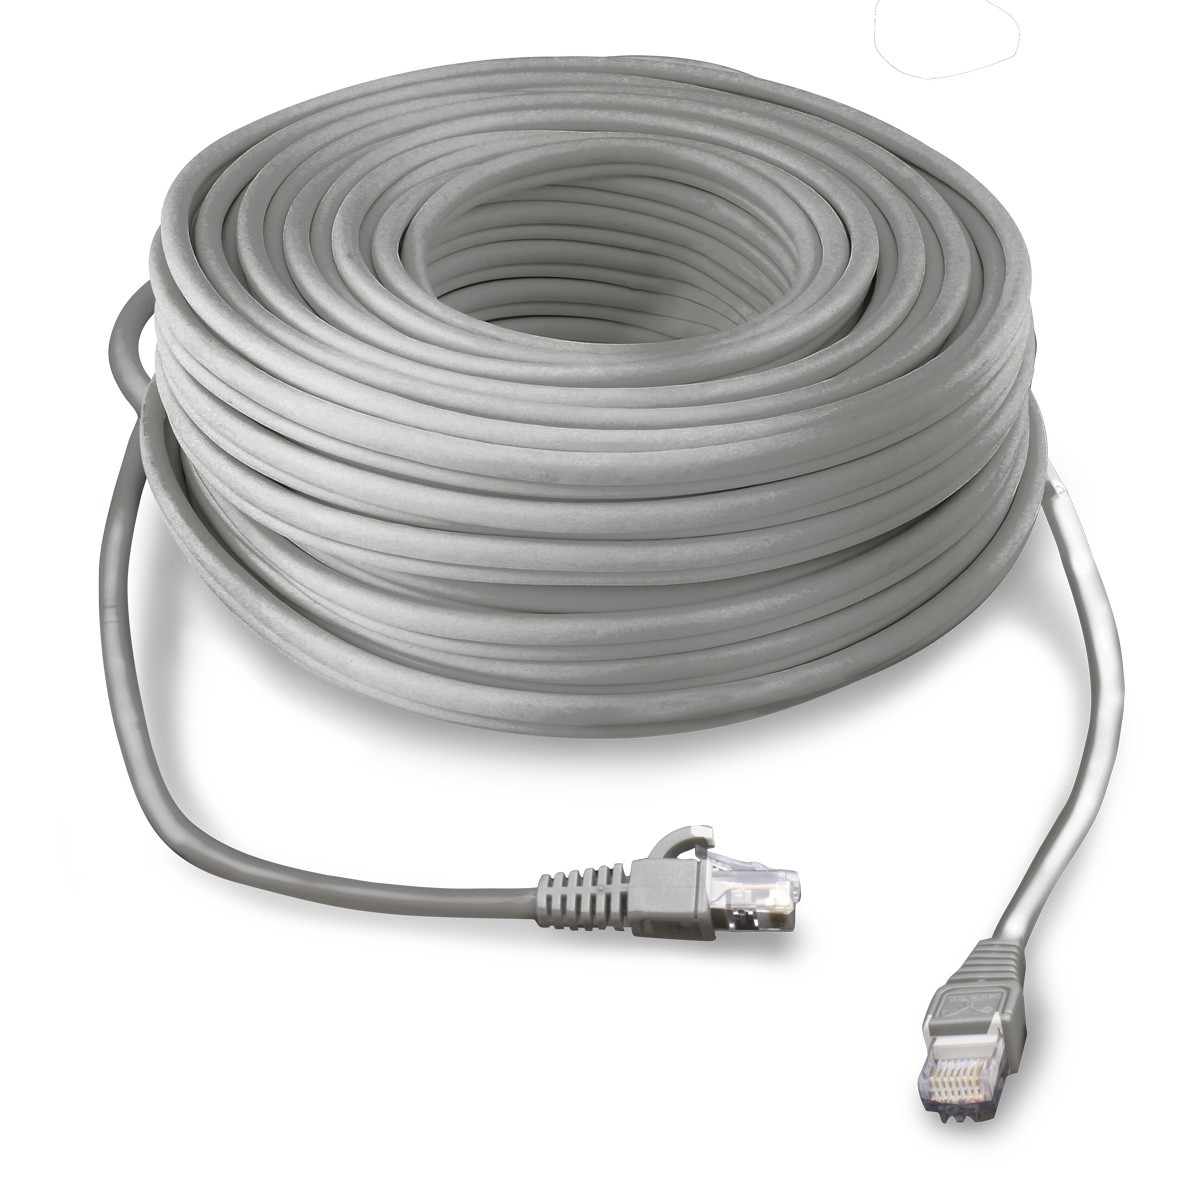 Cable & Connectors image